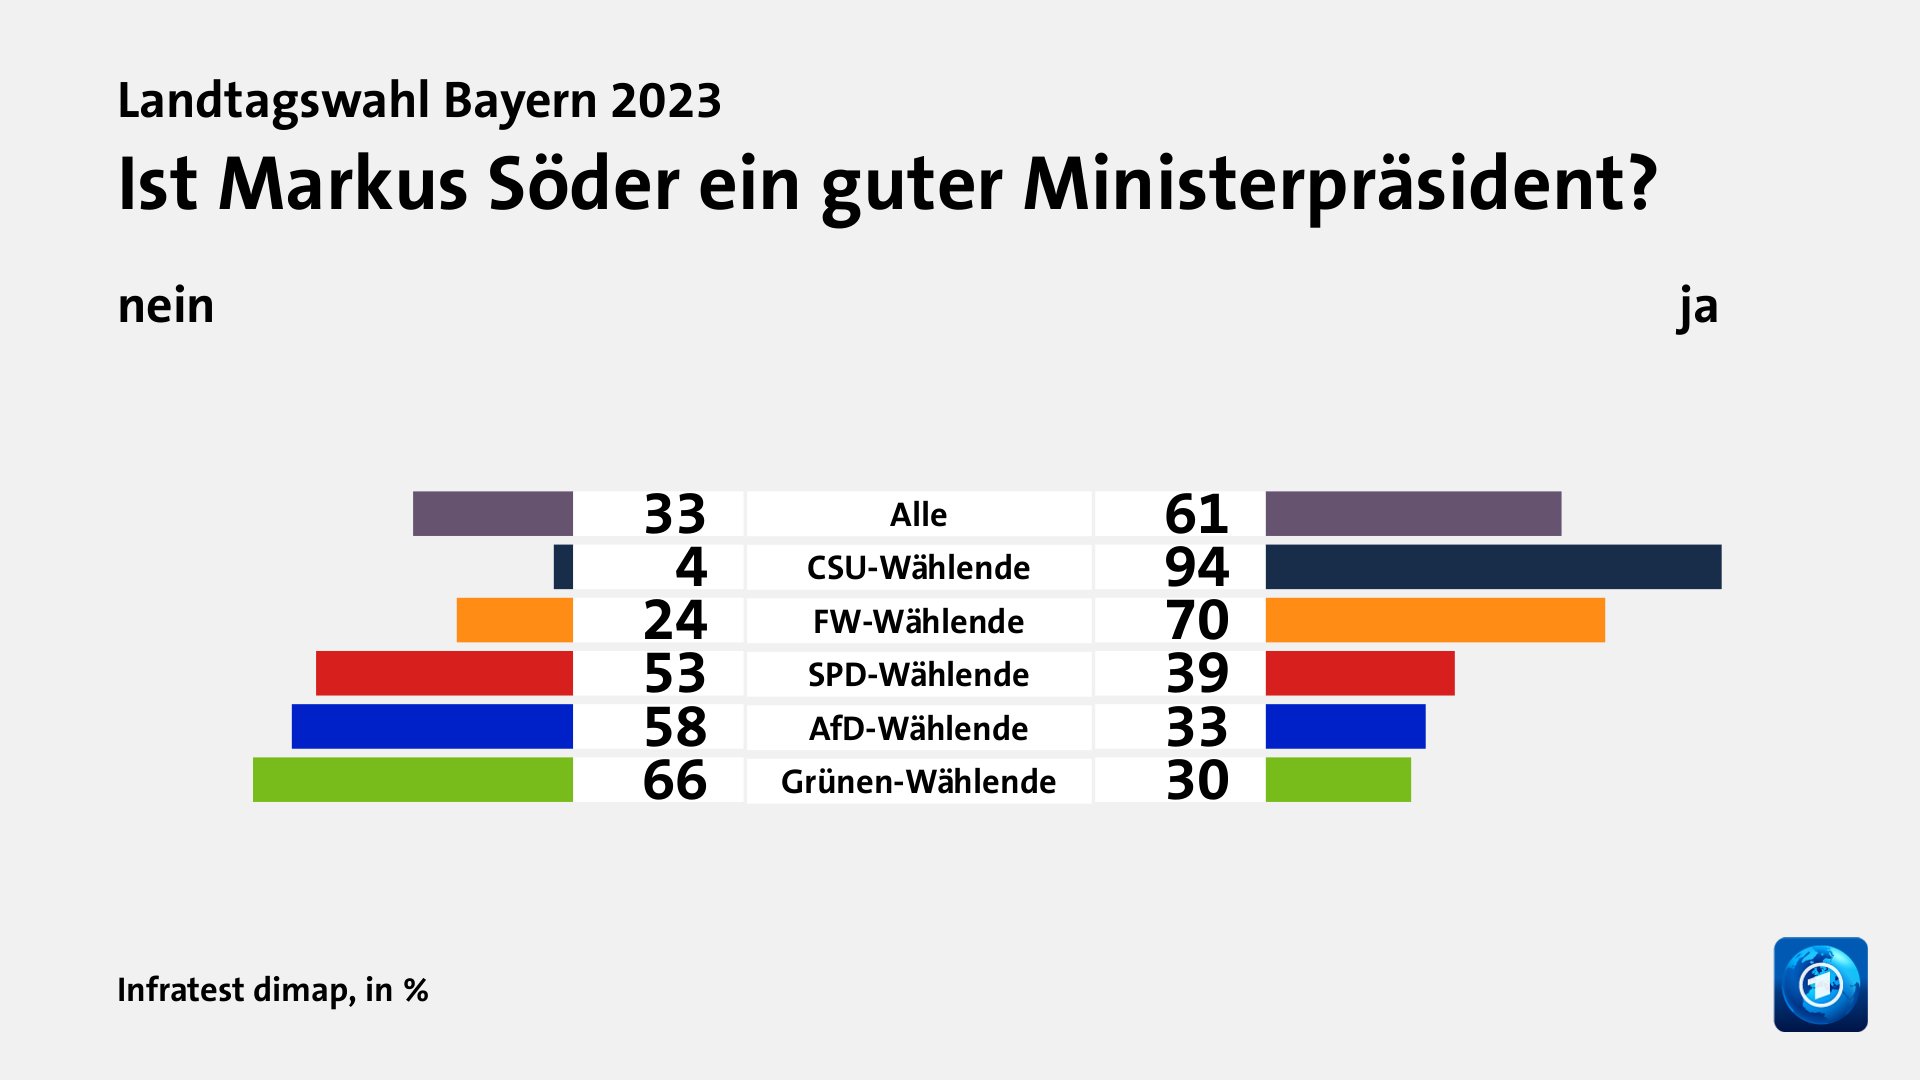 Ist Markus Söder ein guter Ministerpräsident? (in %) Alle: nein 33, ja 61; CSU-Wählende: nein 4, ja 94; FW-Wählende: nein 24, ja 70; SPD-Wählende: nein 53, ja 39; AfD-Wählende: nein 58, ja 33; Grünen-Wählende: nein 66, ja 30; Quelle: Infratest dimap